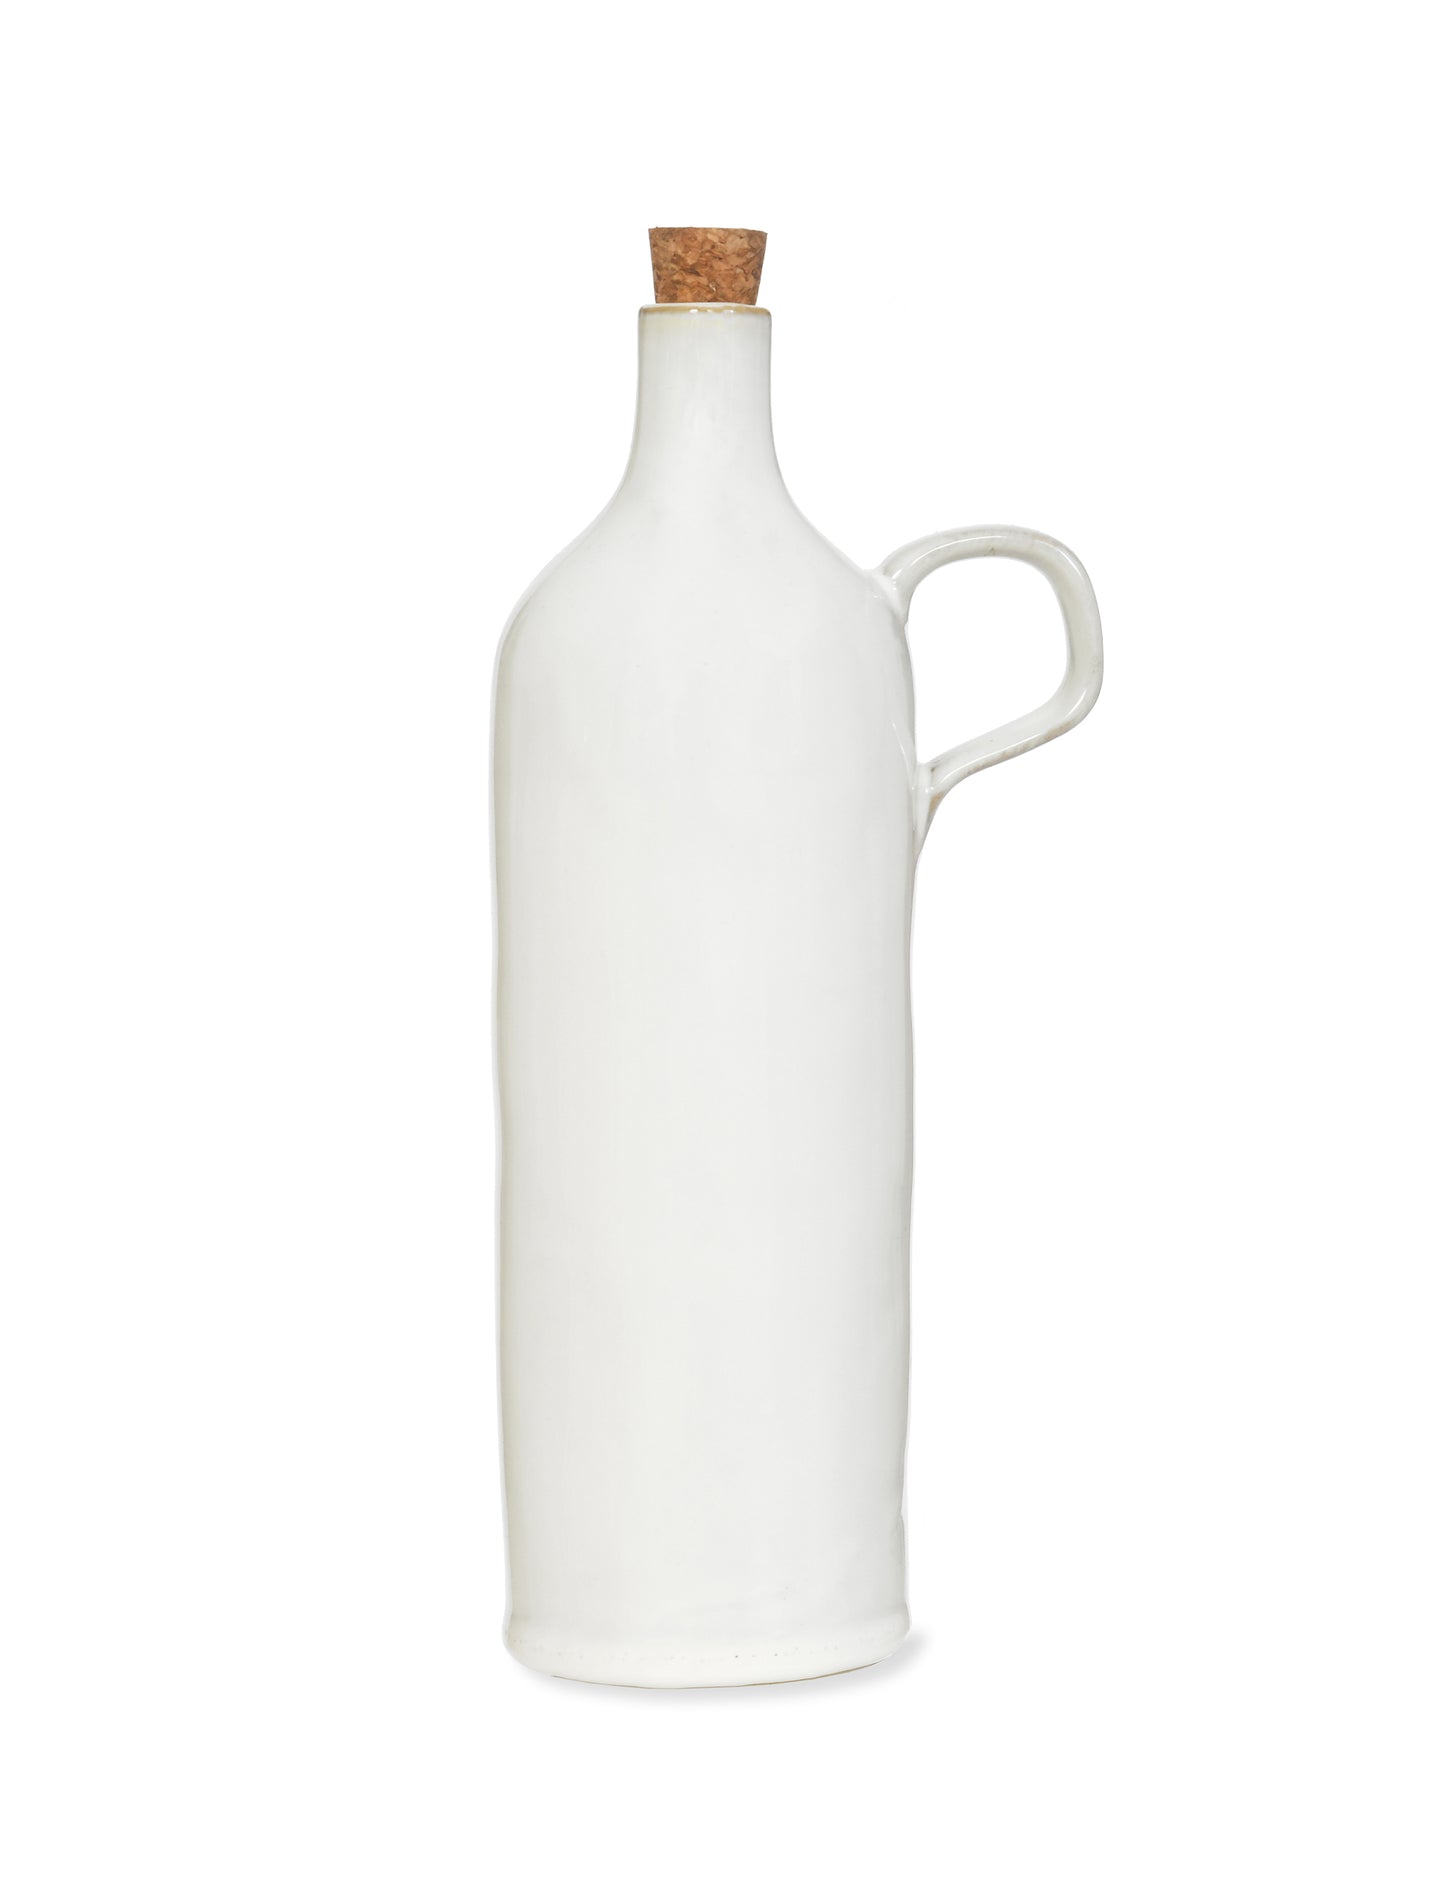 Ithaca Ceramic Oil Bottle